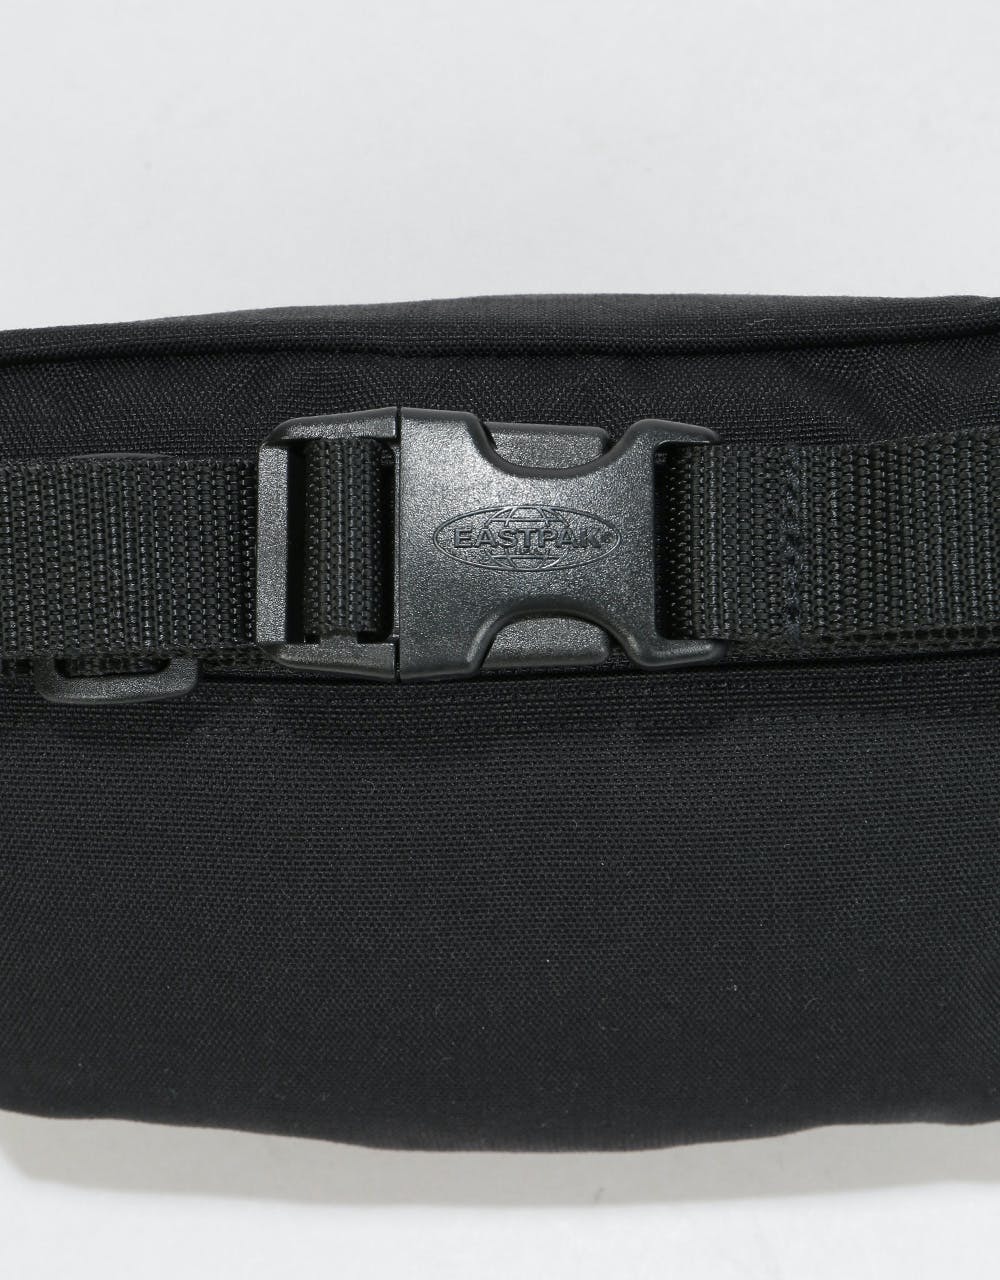 Eastpak Sawer Cross Body Bag - Black